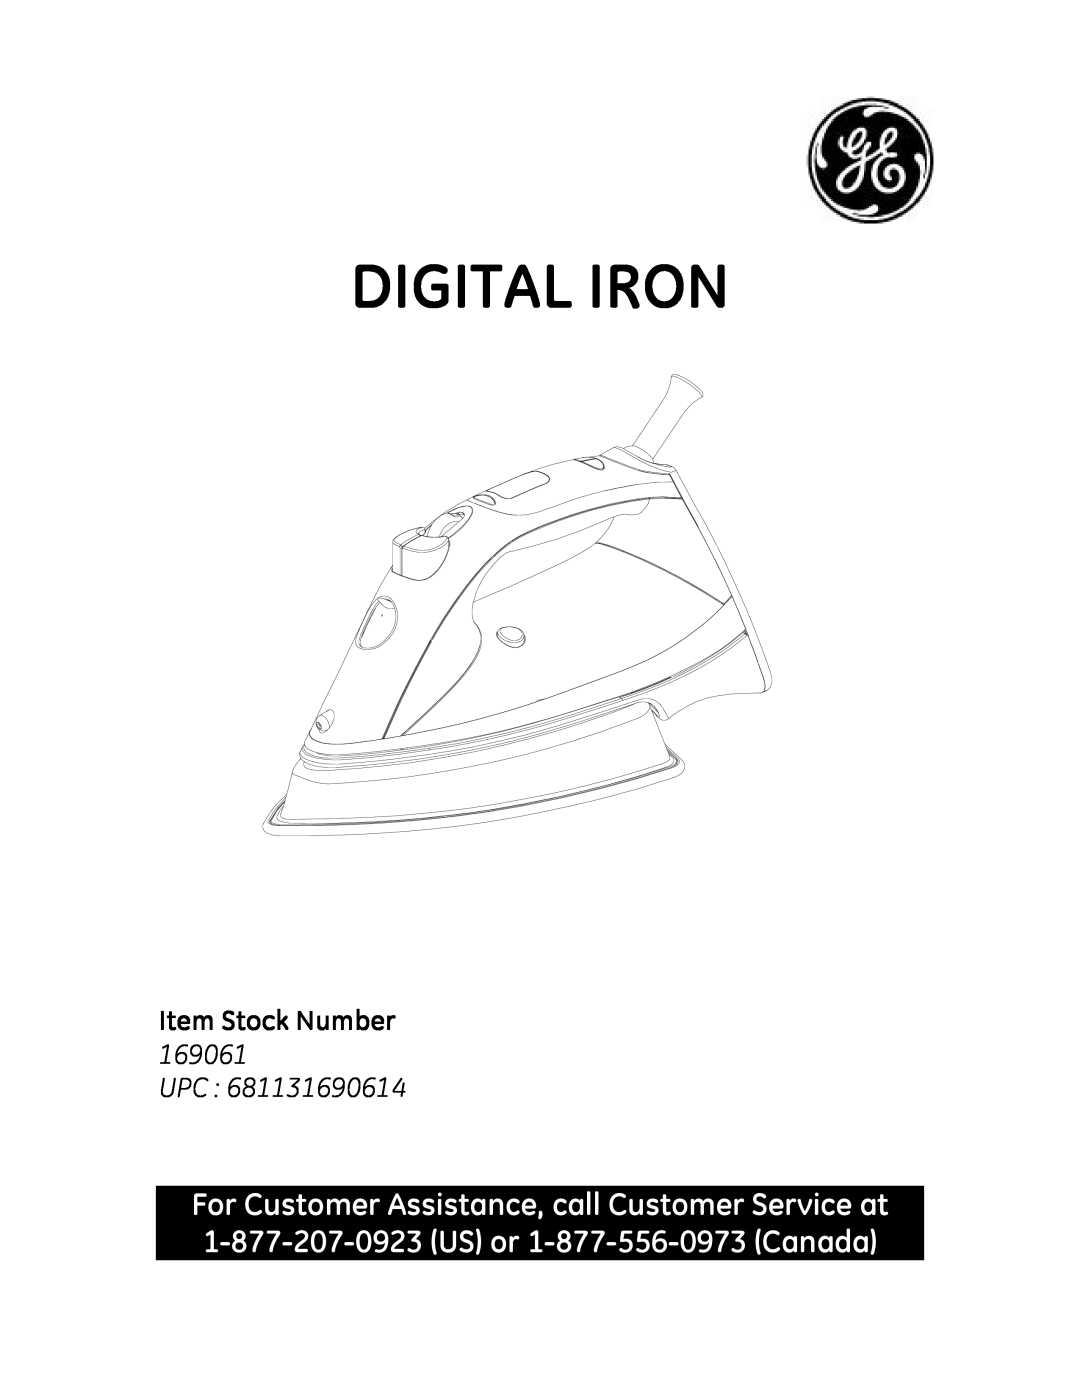 GE 681131690614 manual Digital Iron, Item Stock Number UPC 